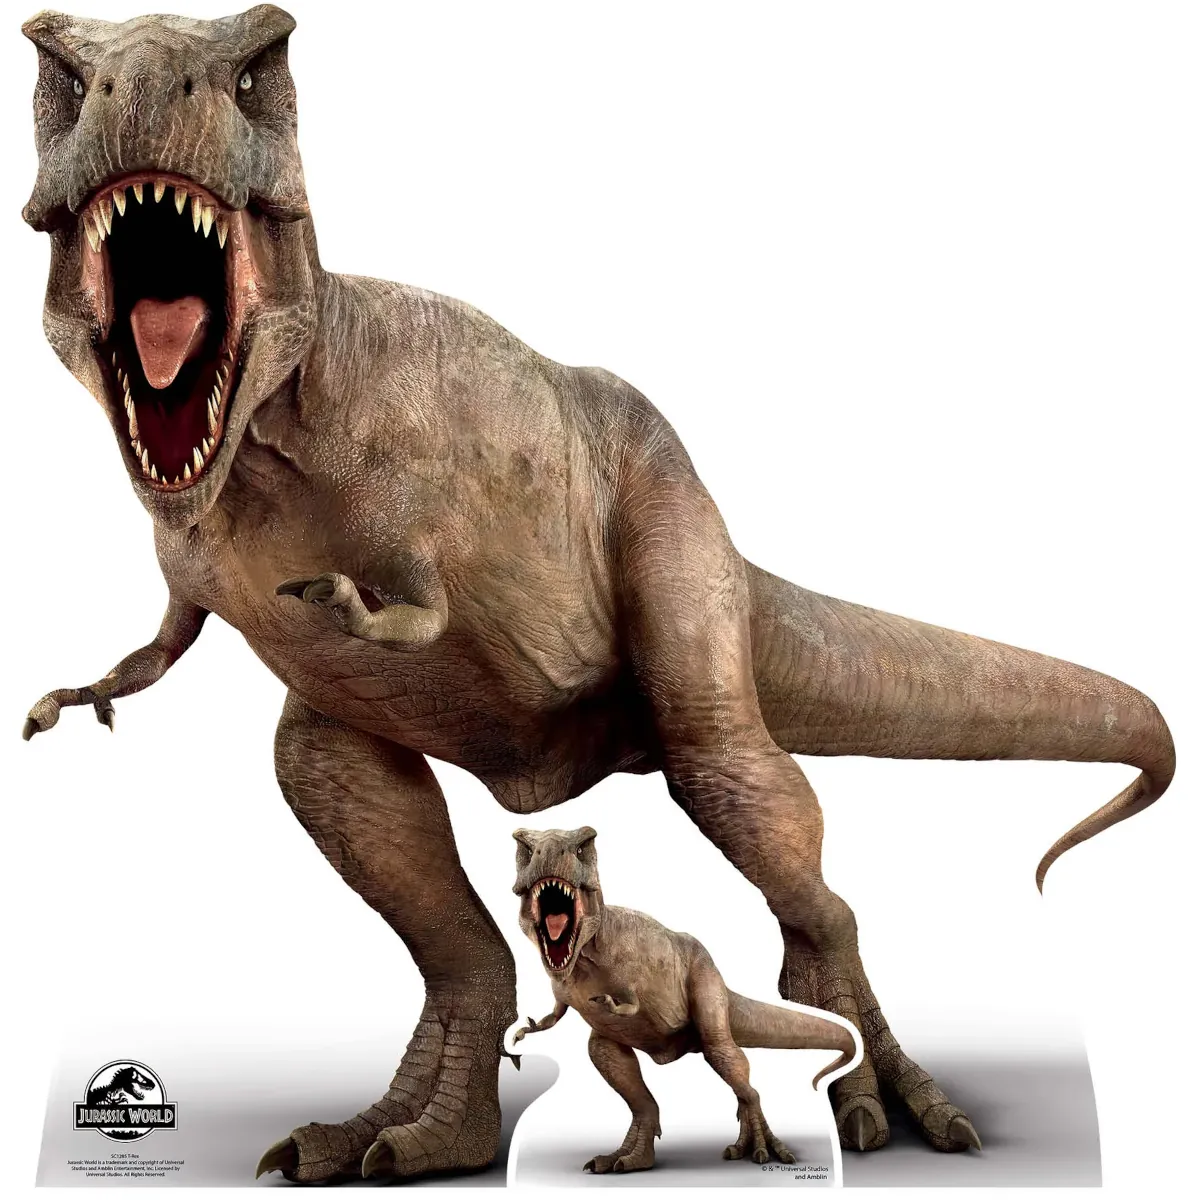 SC1285 Tyrannosaurus Rex 'T-Rex' Dinosaur (Jurassic World) Official Large + Mini Cardboard Cutout Standee Front